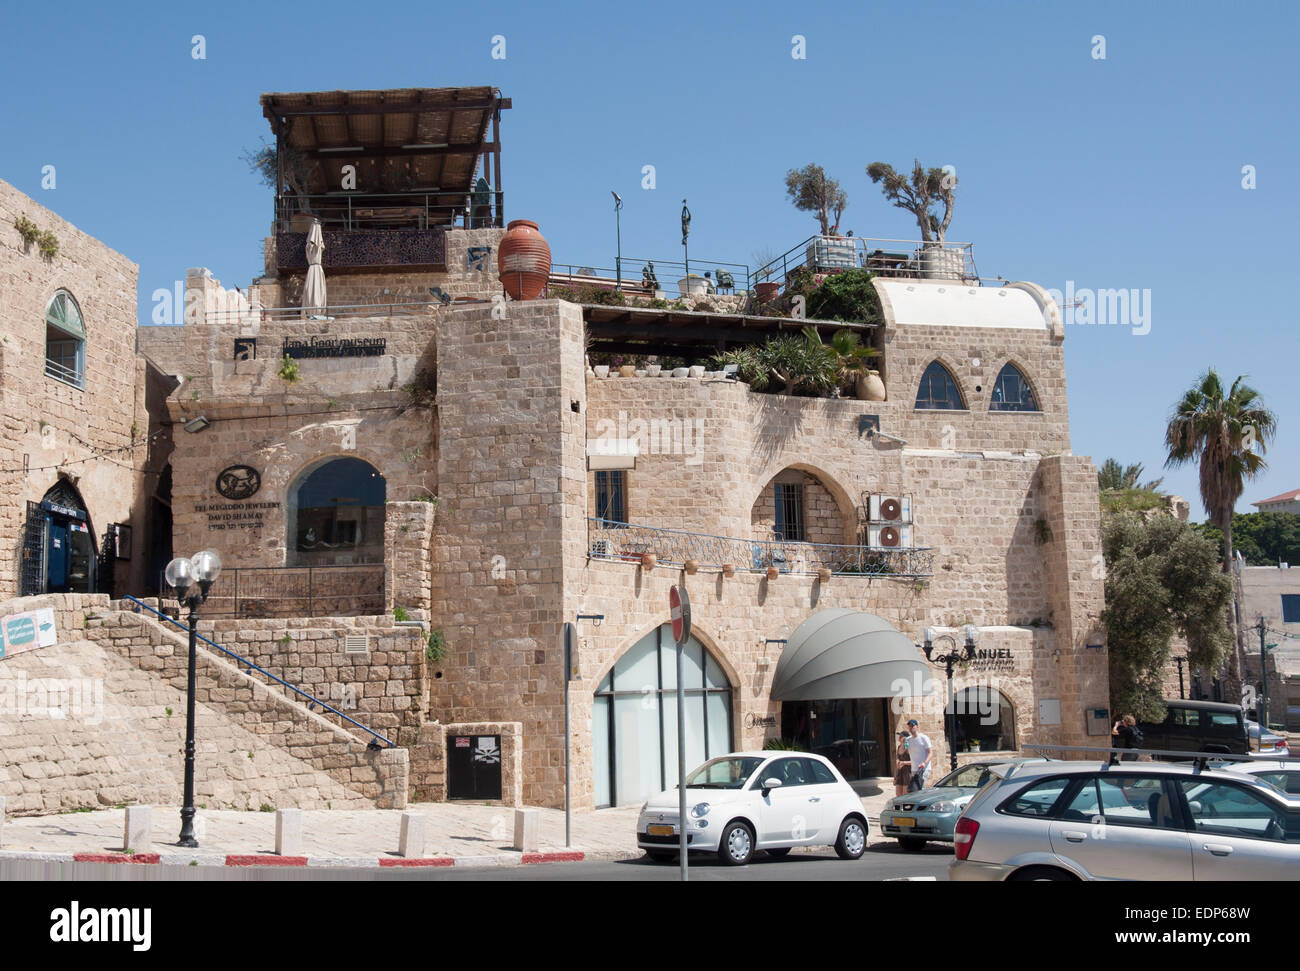 Ilana Goor Museum, Old Jaffa, Israel Stock Photo - Alamy